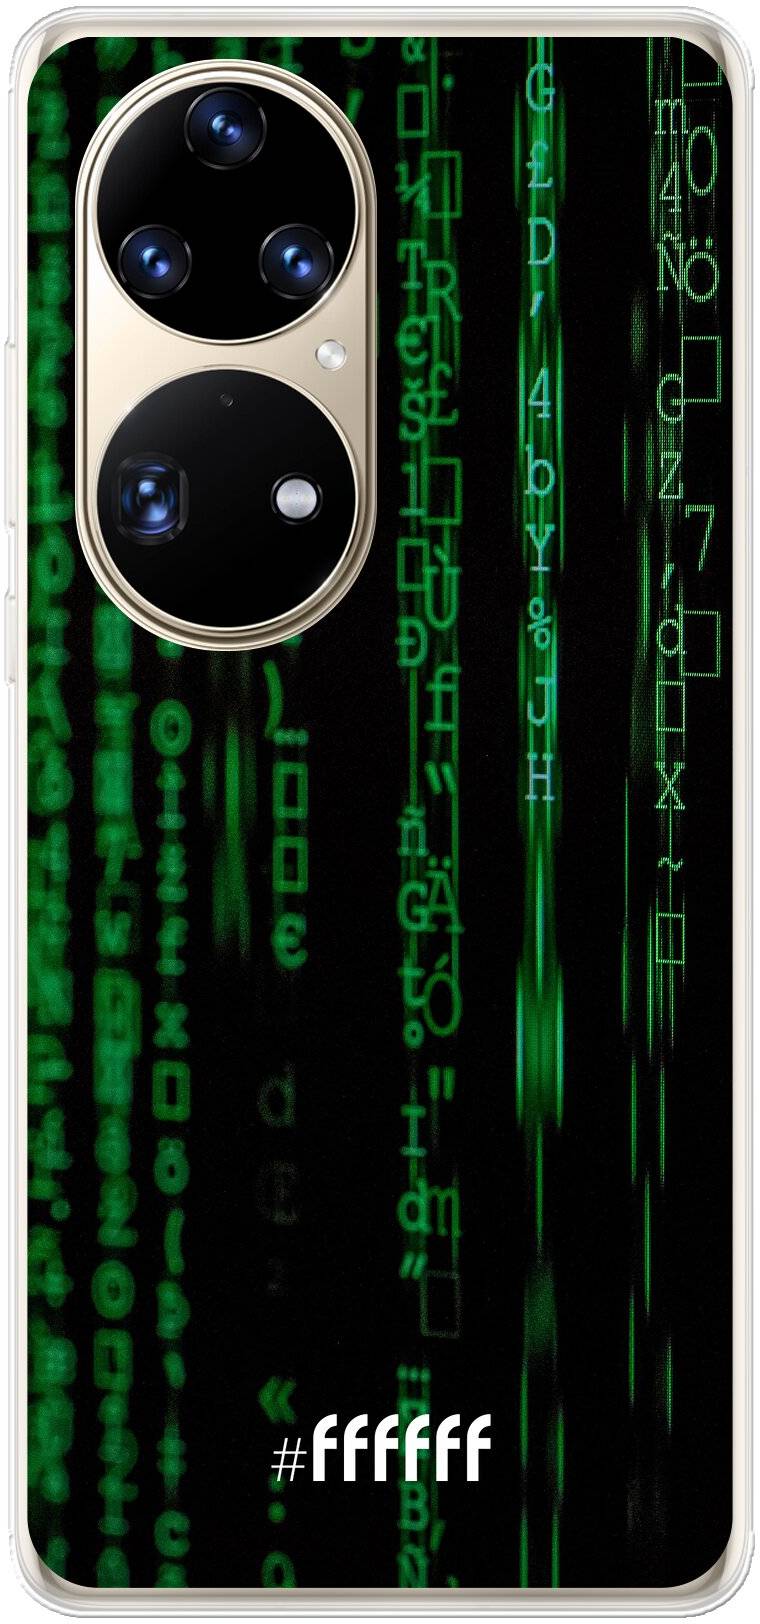 Hacking The Matrix P50 Pro